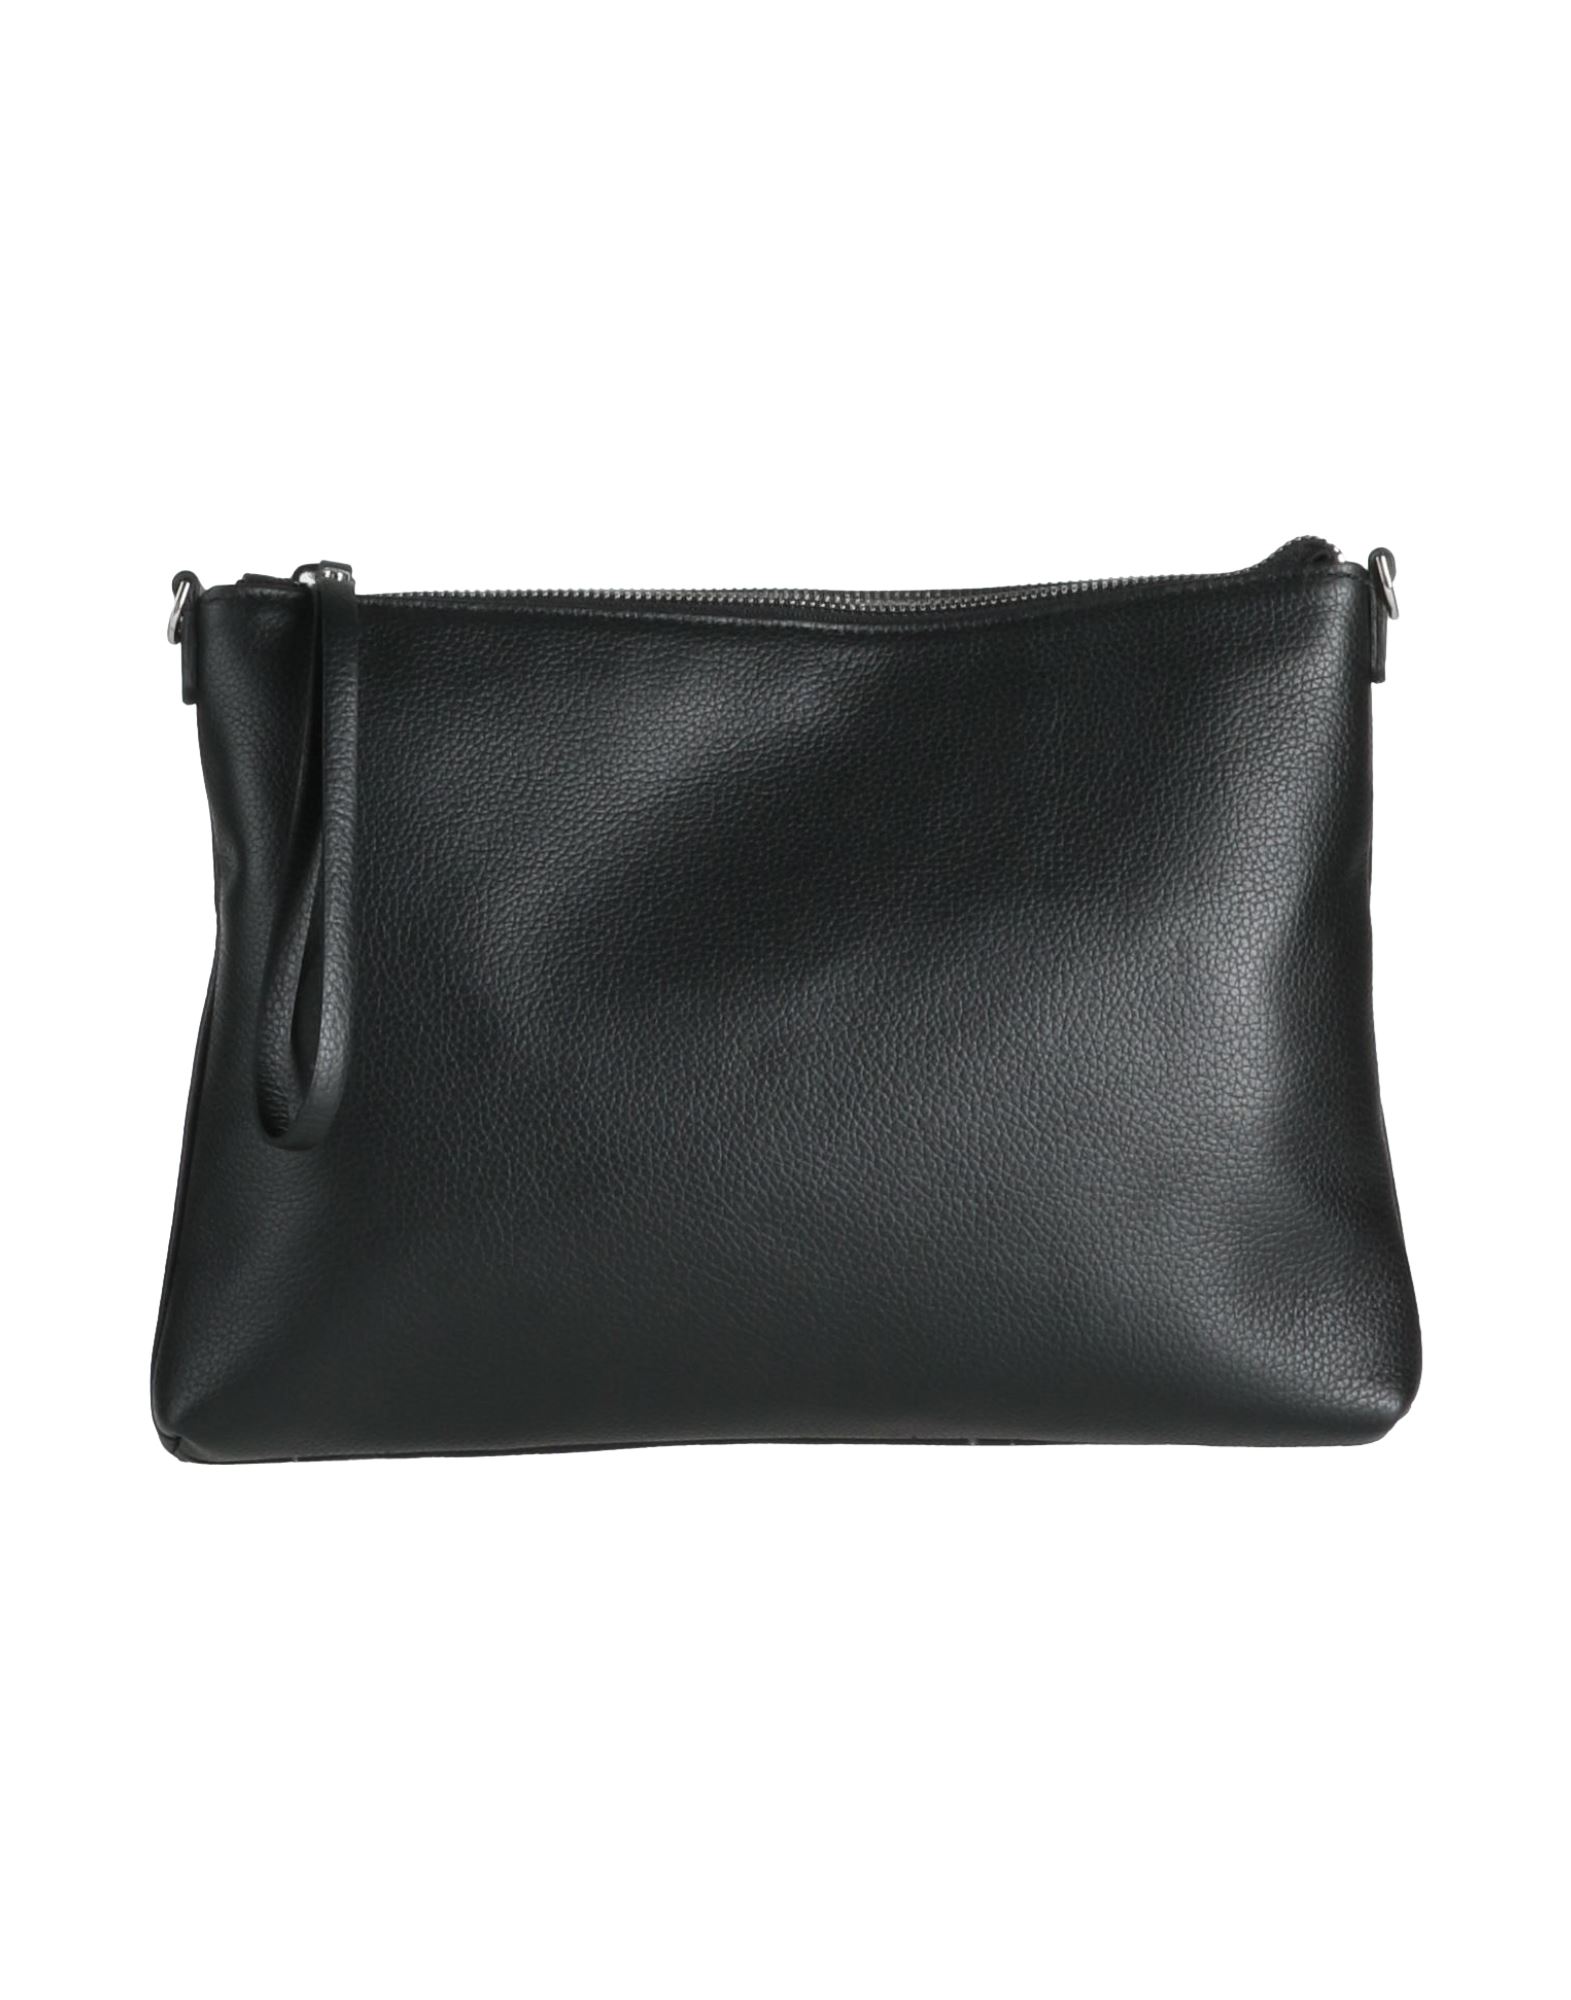 Gianni Chiarini Handbags In Black